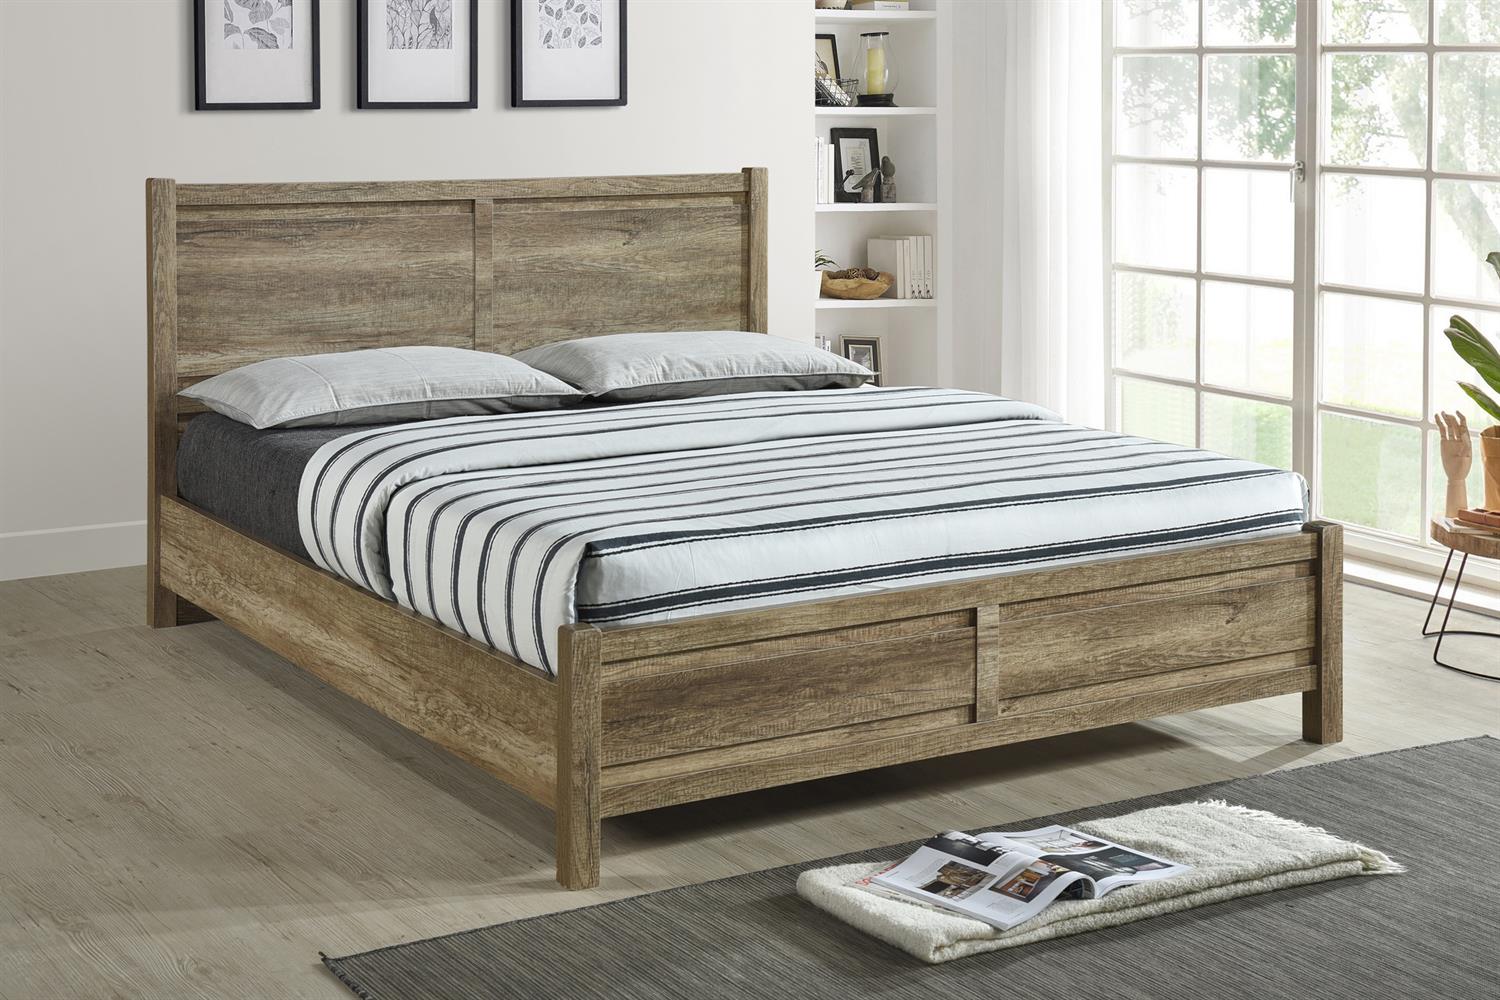 King Size Bed Frame Natural Wood like MDF in Oak Colour